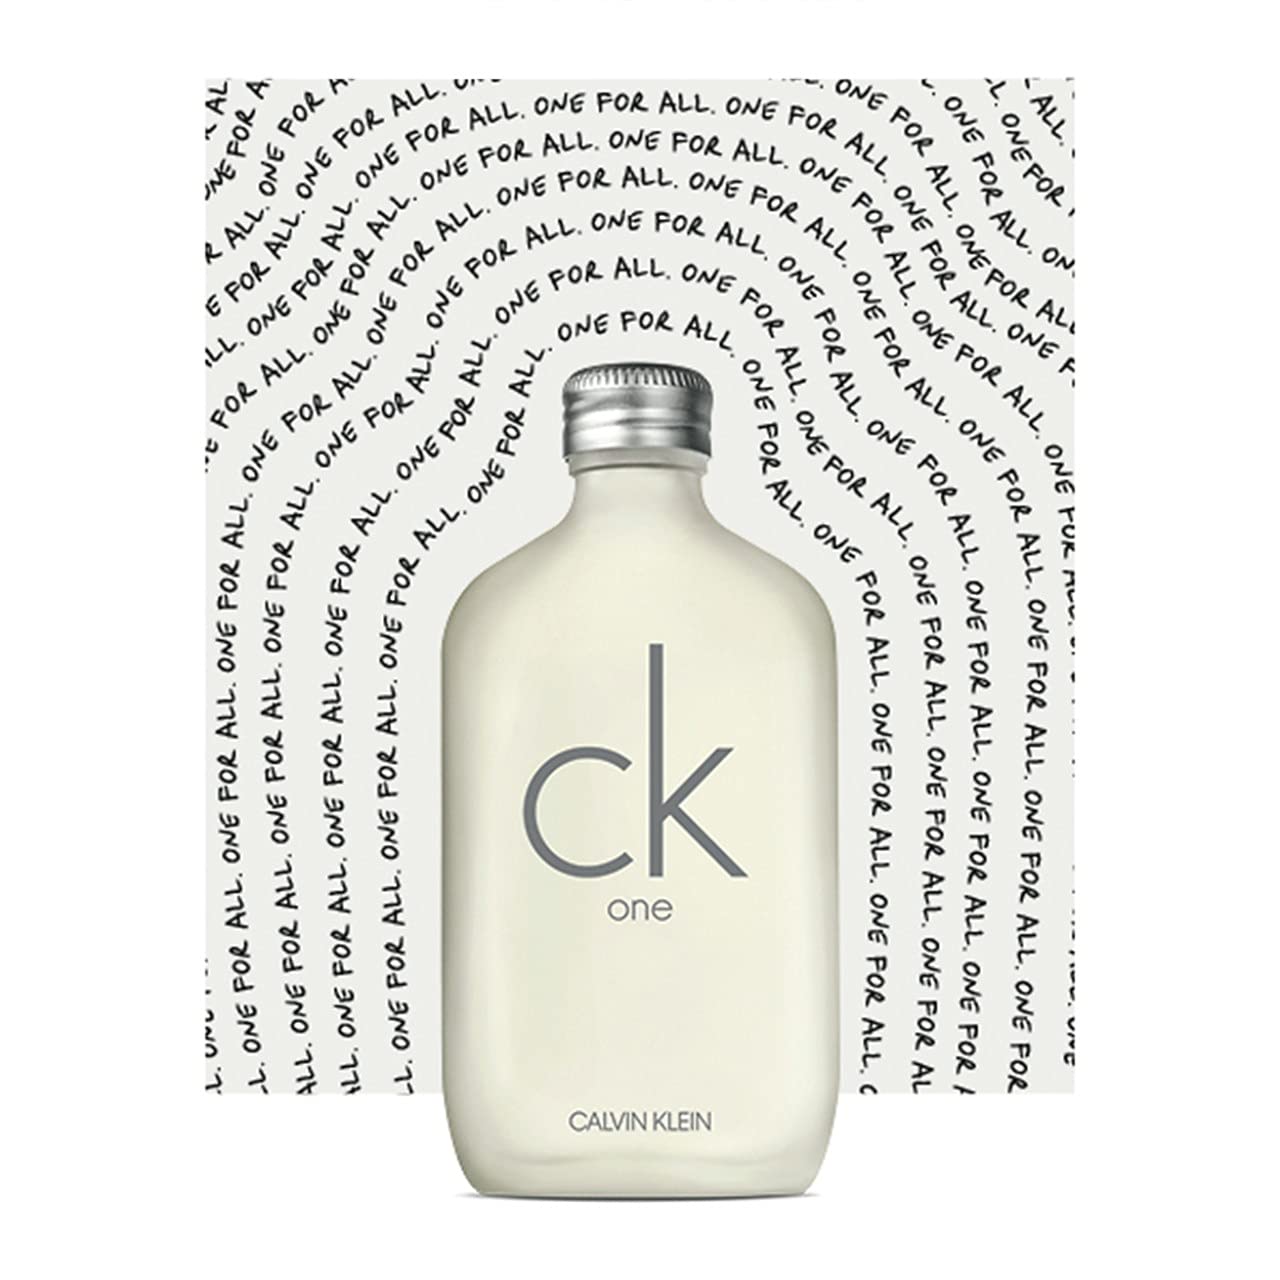 Calvin Klein One Body Wash - My Perfume Shop Australia